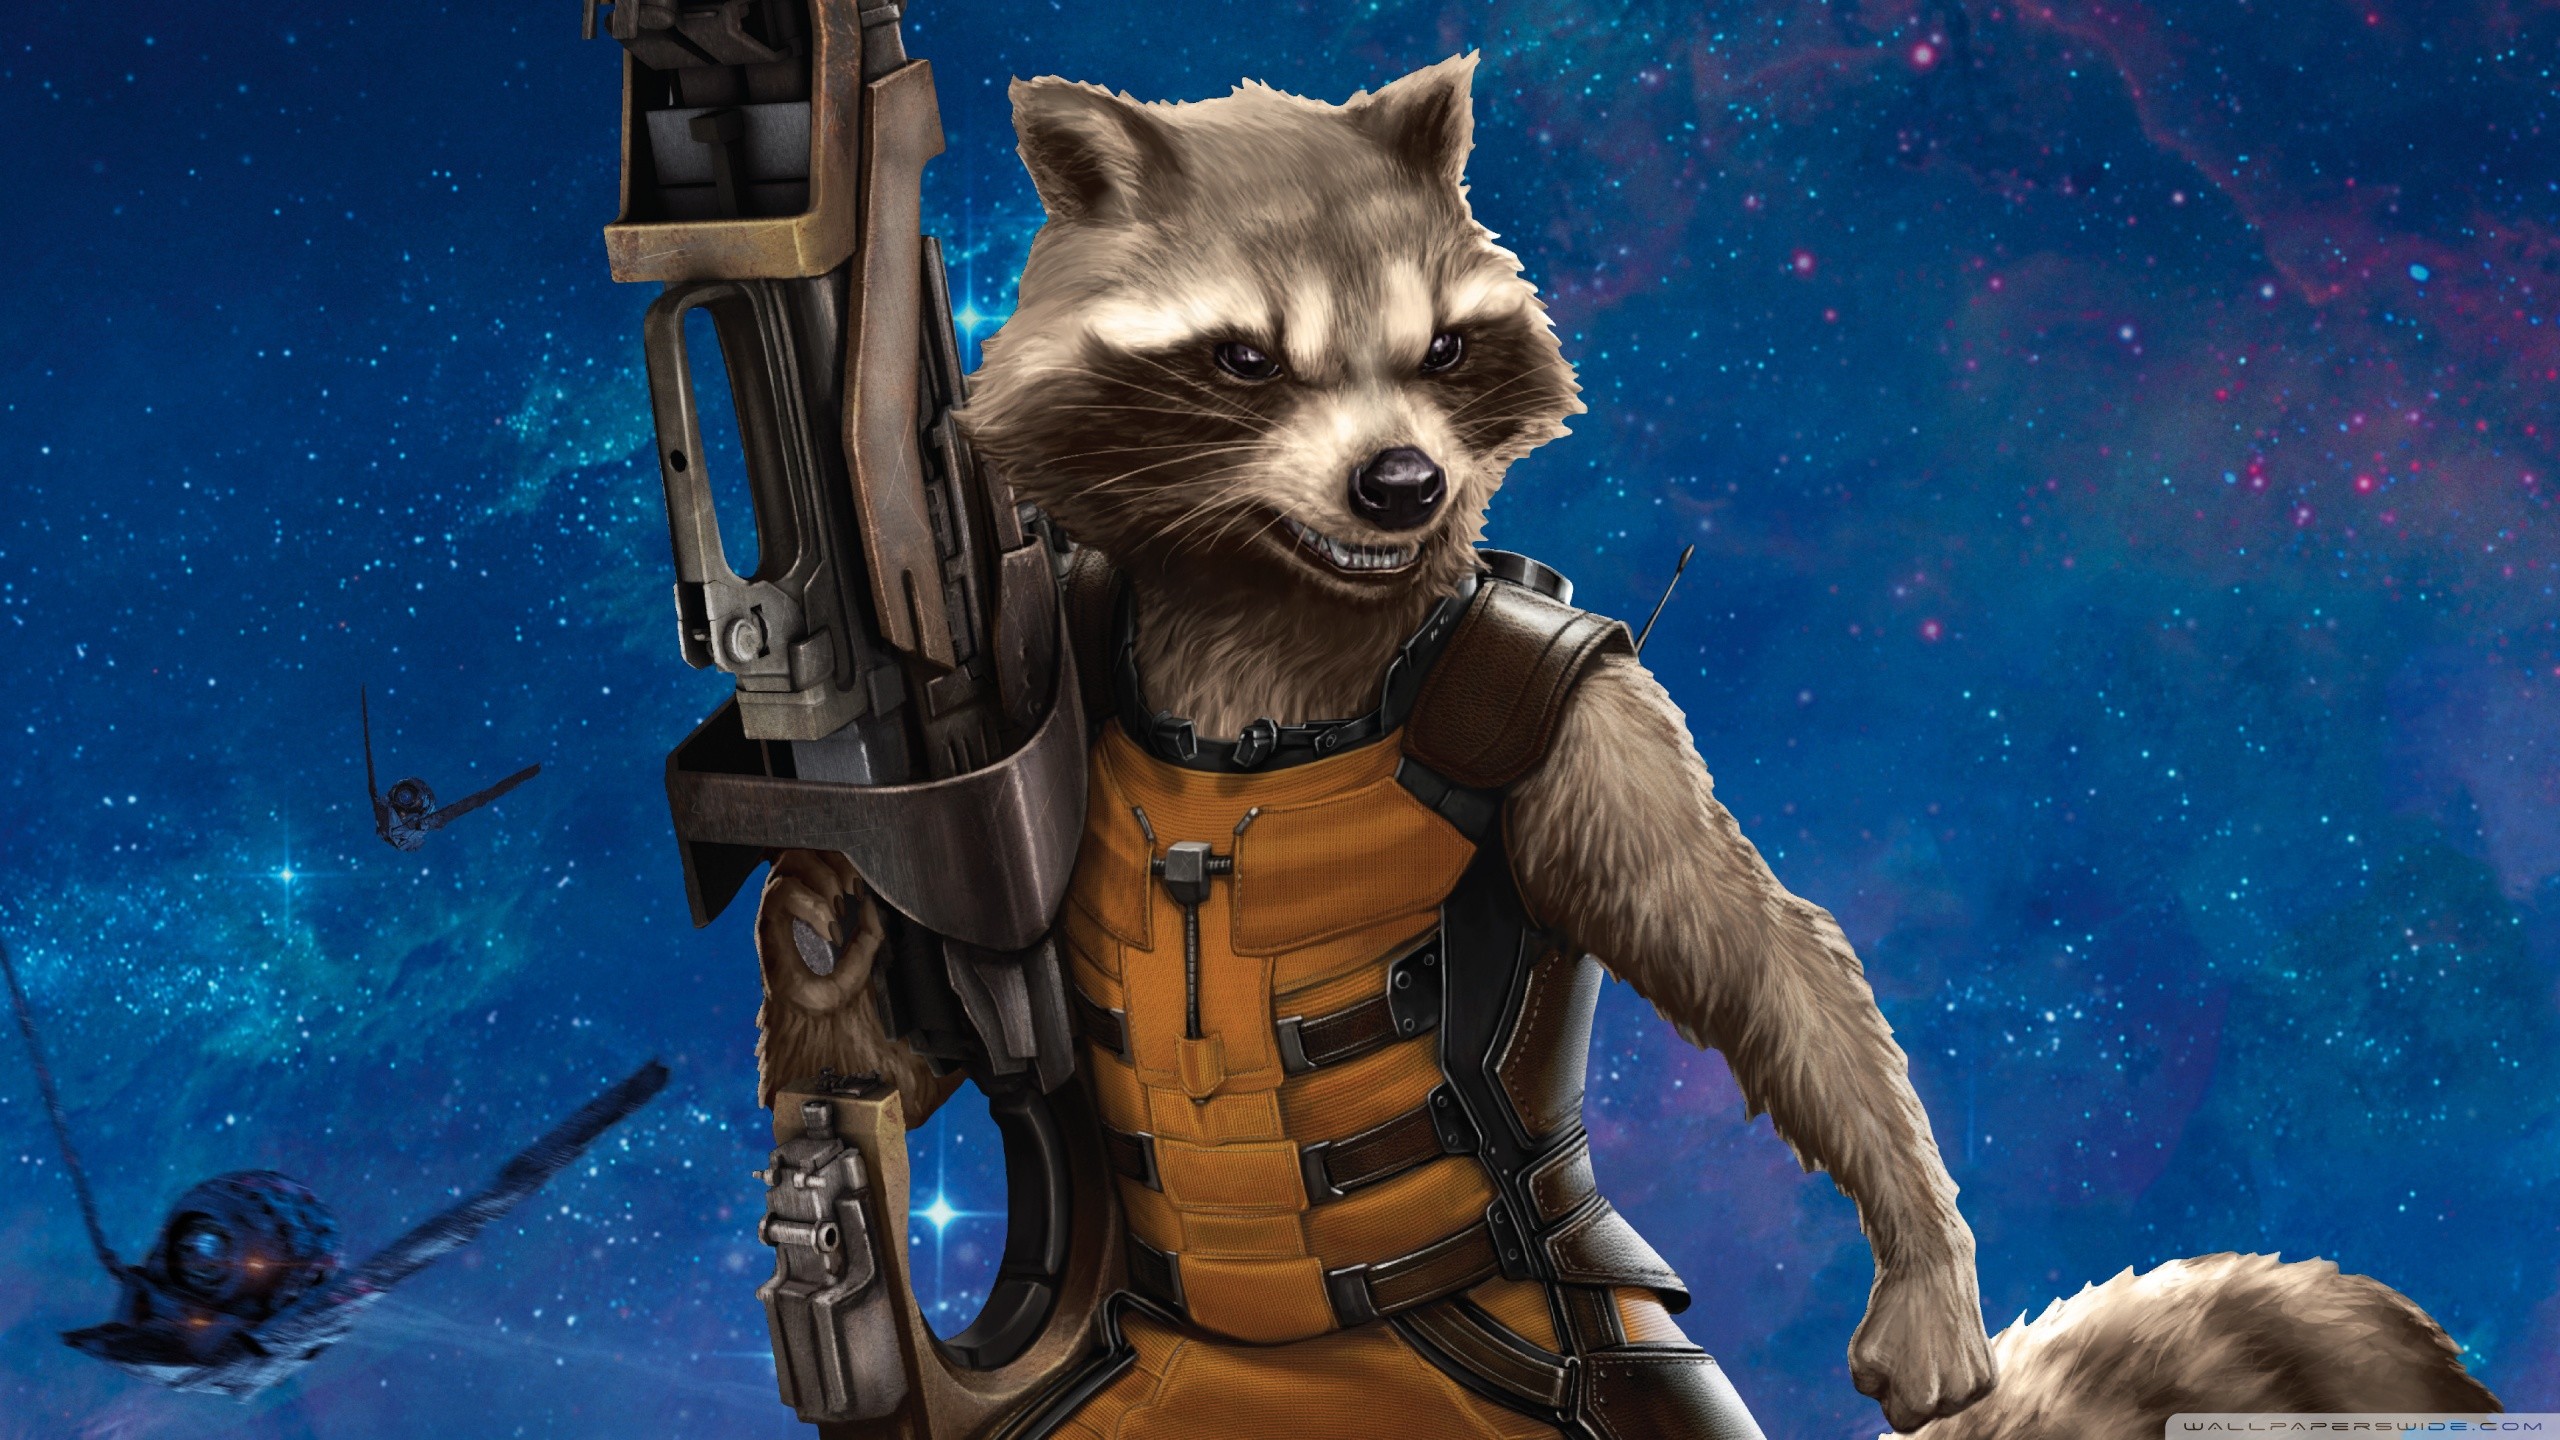 HD Rocket Raccoon Wallpaper Image